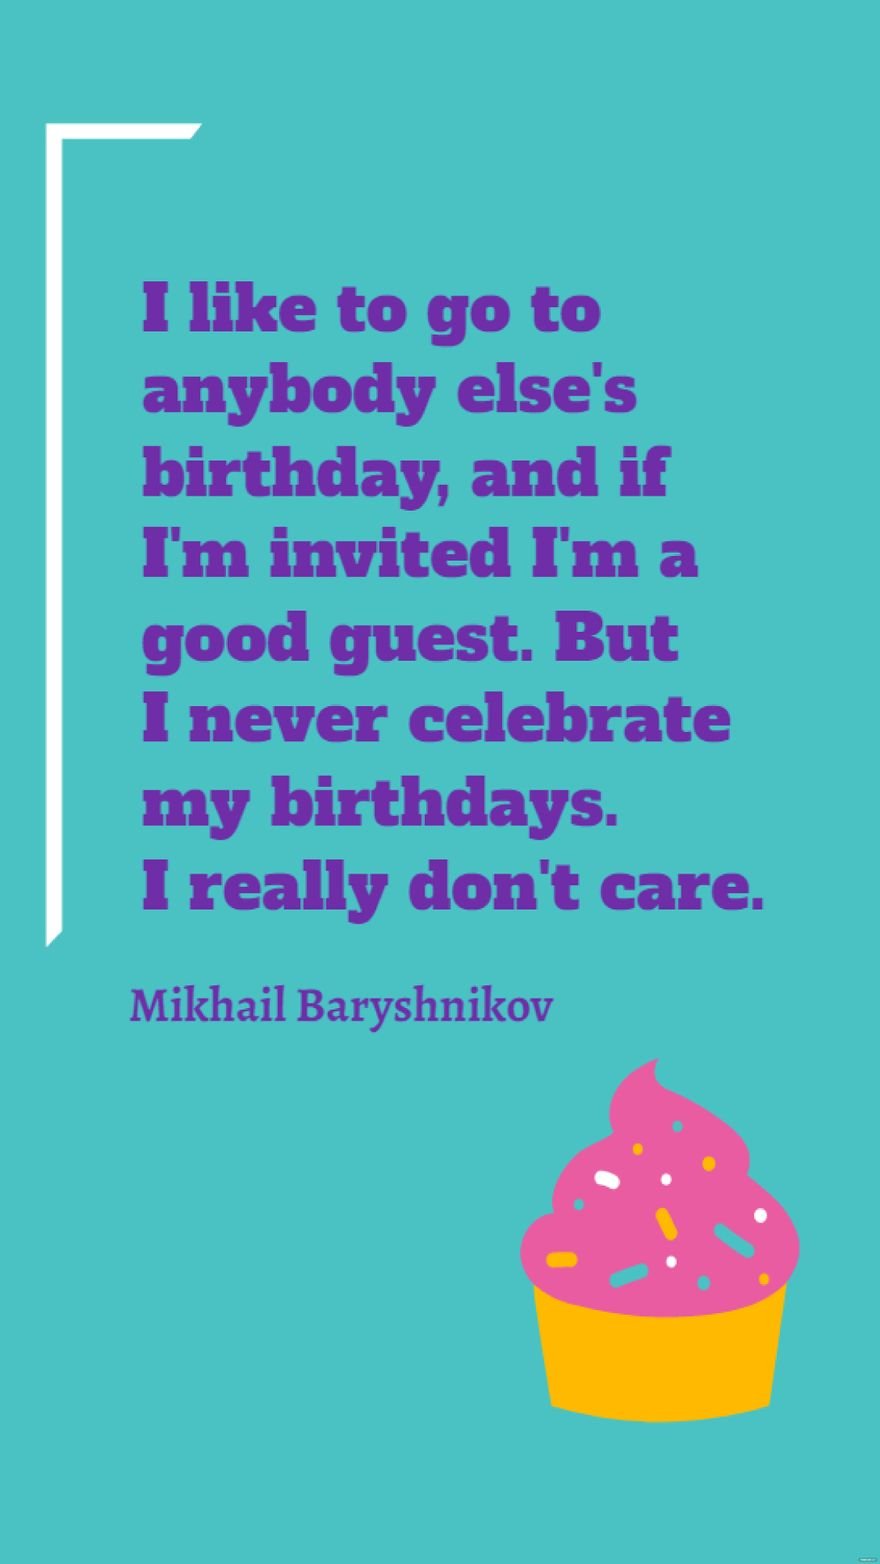 Free Mikhail Baryshnikov - I like to go to anybody else's birthday, and if I'm invited I'm a good guest. But I never celebrate my birthdays. I really don't care. in JPG